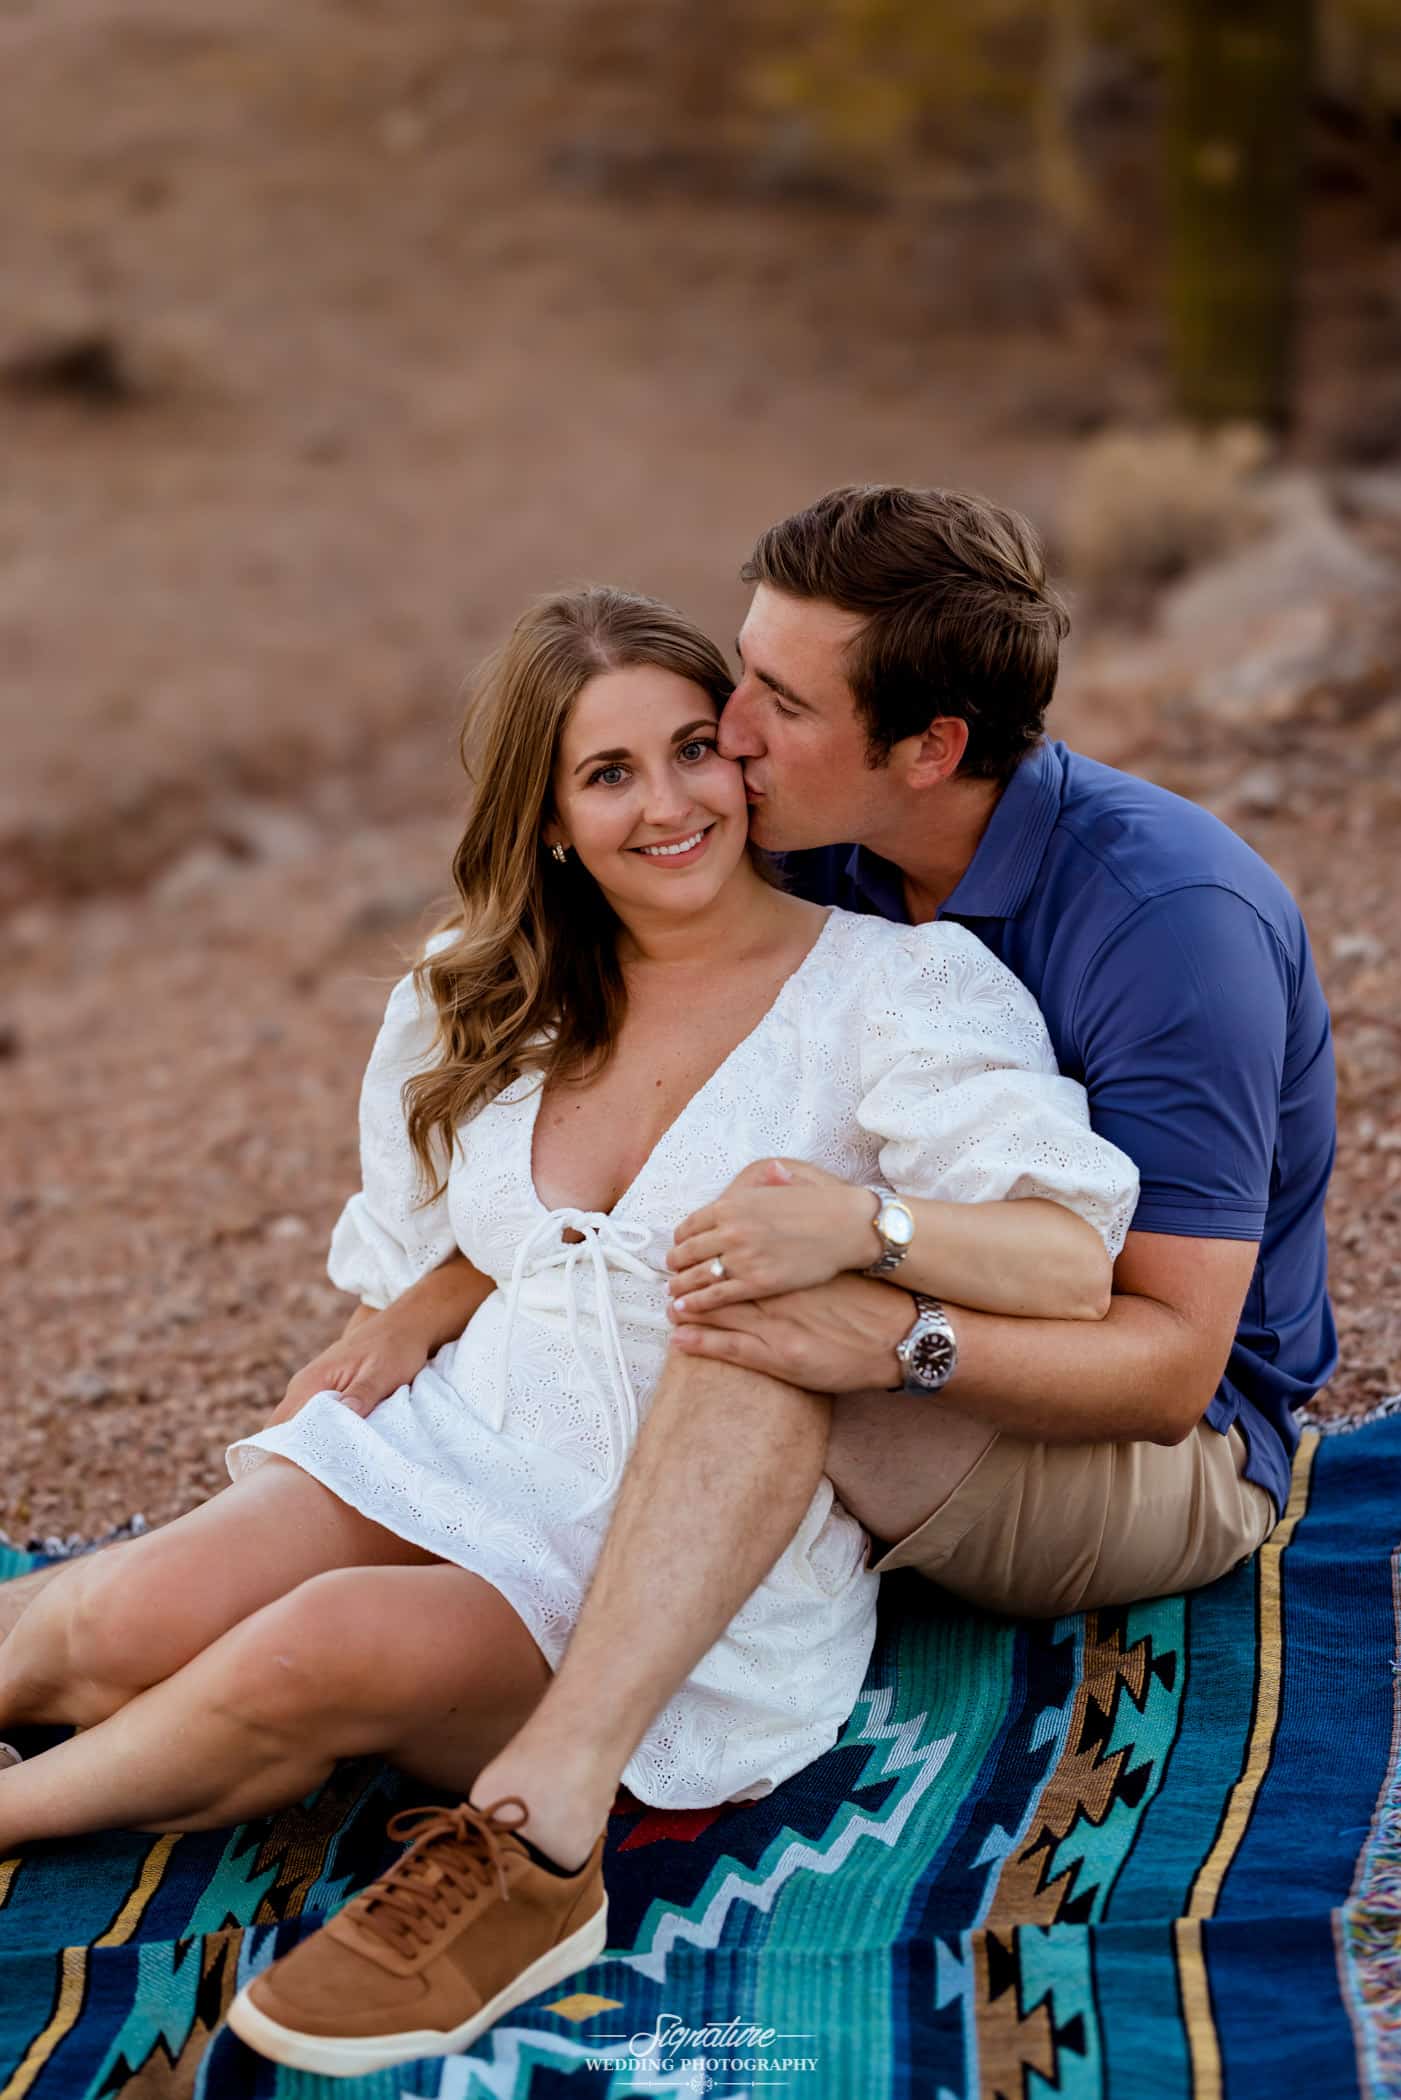 Man kissing woman's cheek sitting on blanket in desert